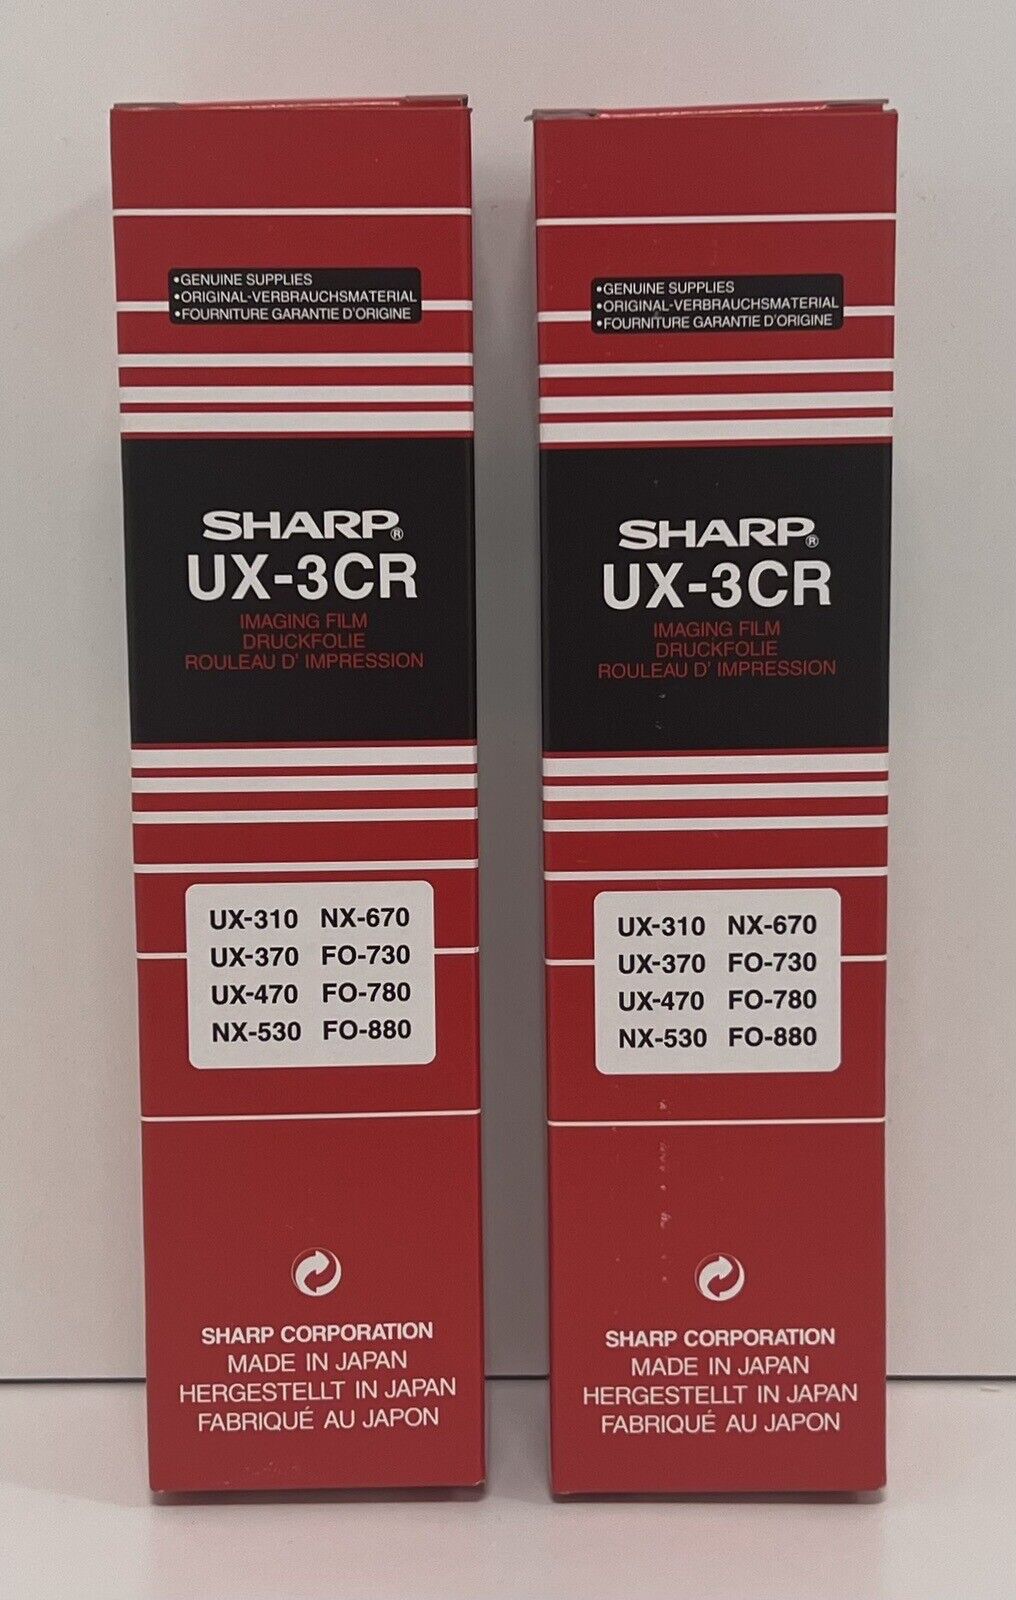 Sharp UX-3CR Fax Machine Imaging Film  New - 2 Boxes 2 rolls each box (J)